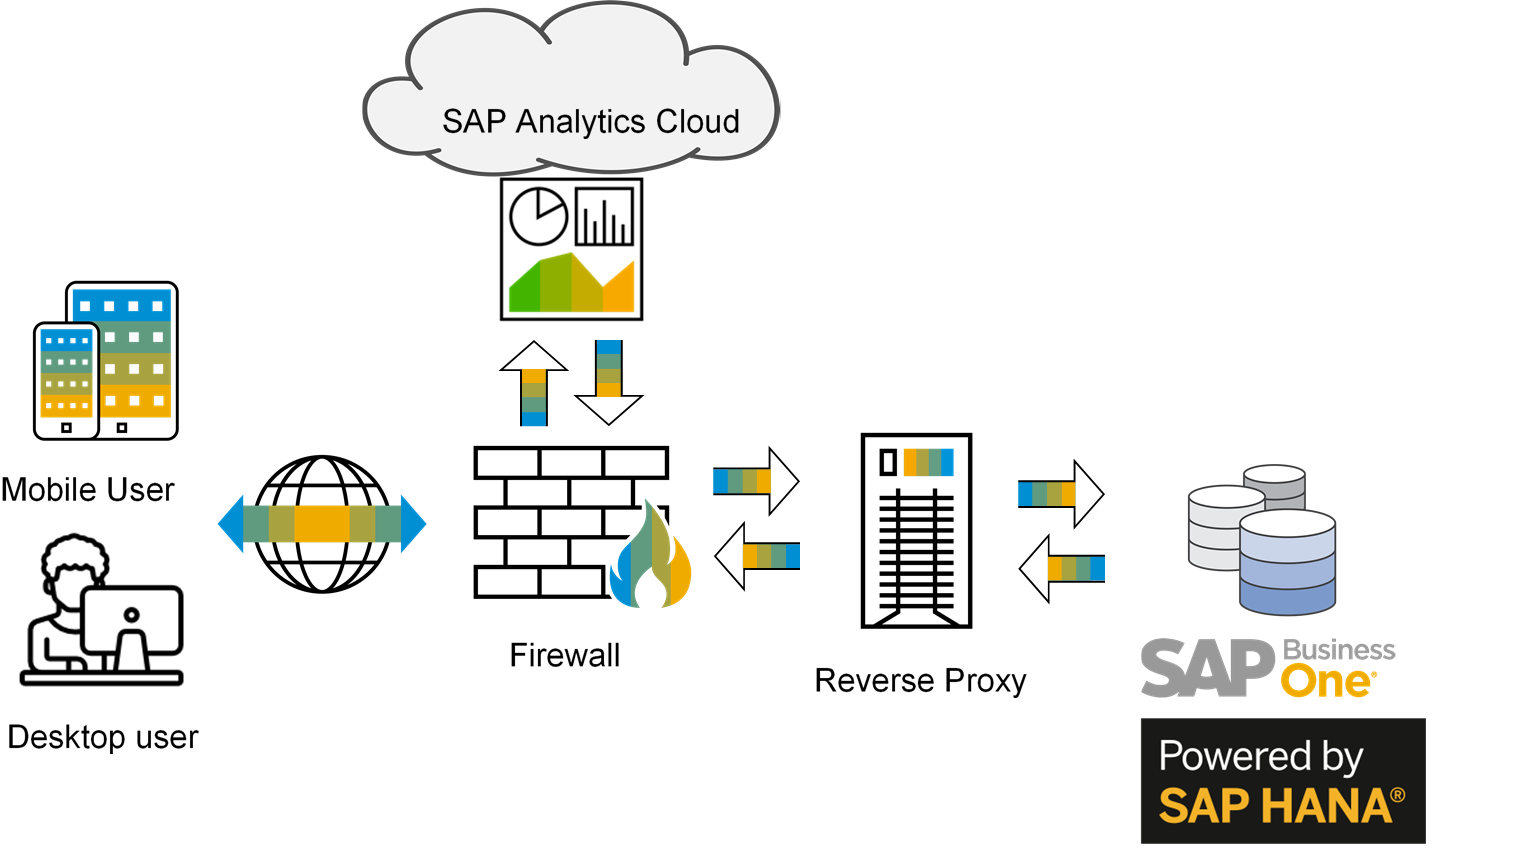 Schema van SAP Analytics Cloud.